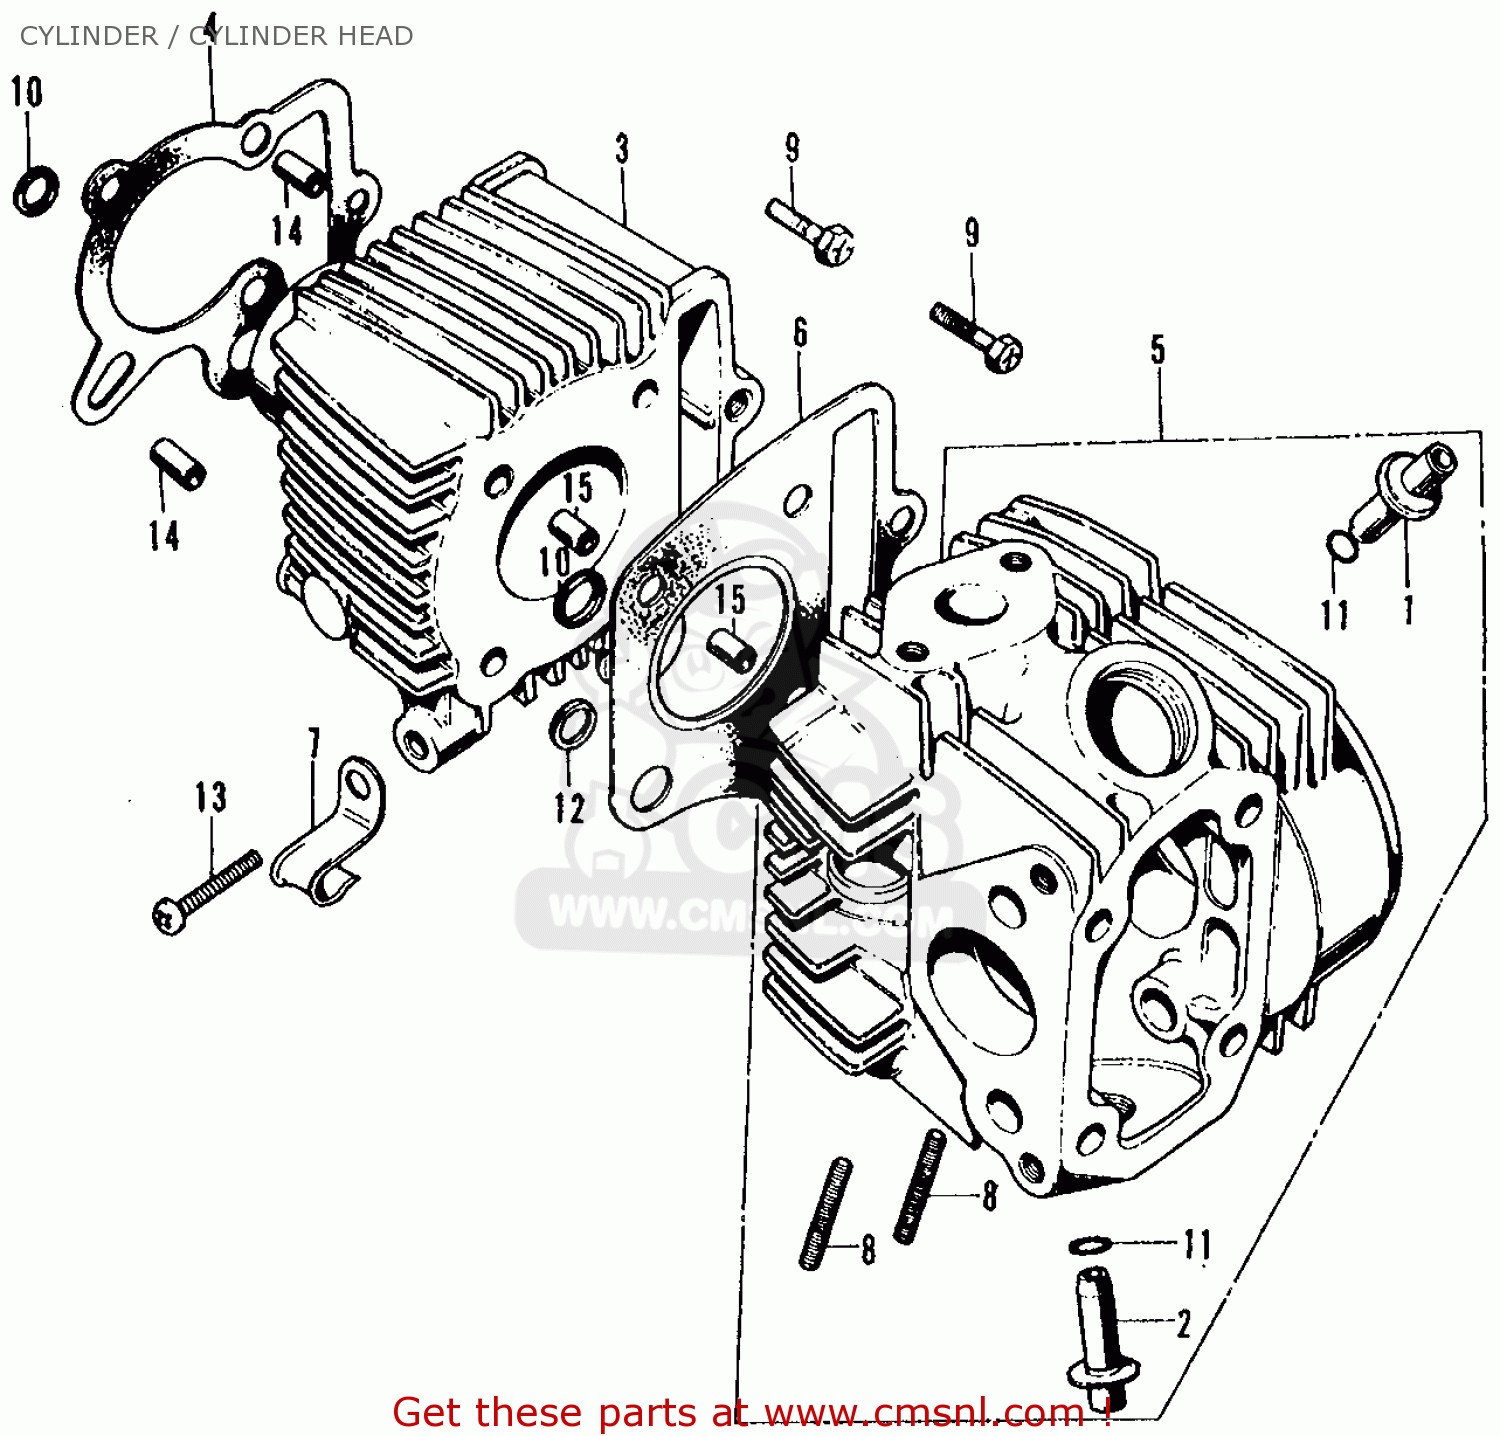 Honda Cd70 Engine Diagram Honda 70 Engine Diagram Honda Ct70 Trail 70 1972 Ct70k1 Usa Cylinder